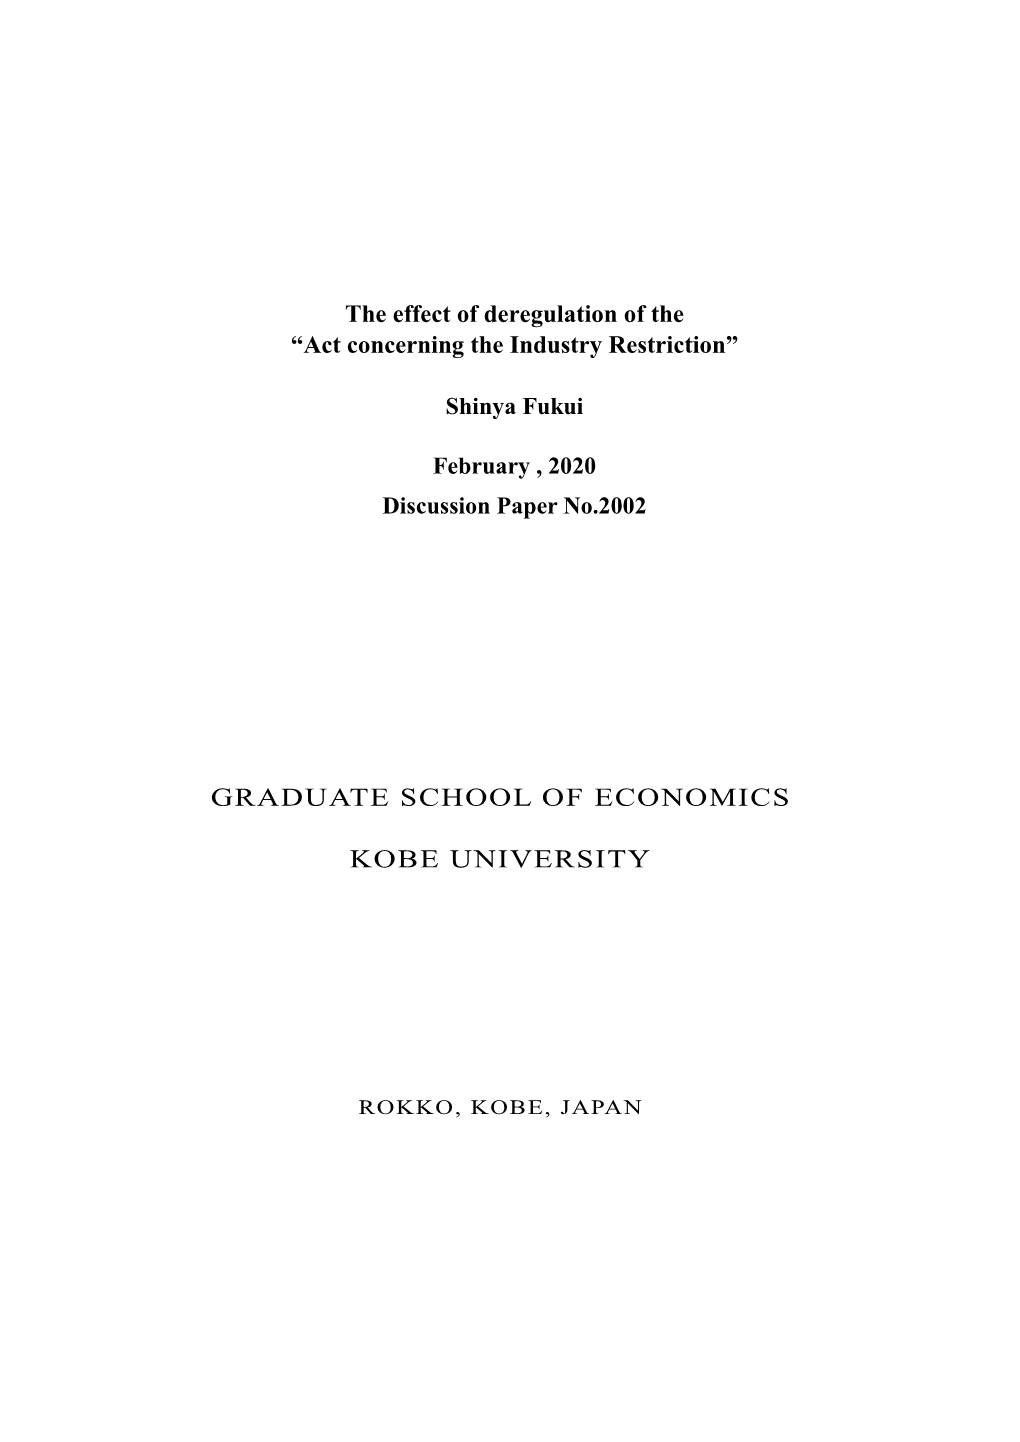 Graduate School of Economics Kobe University